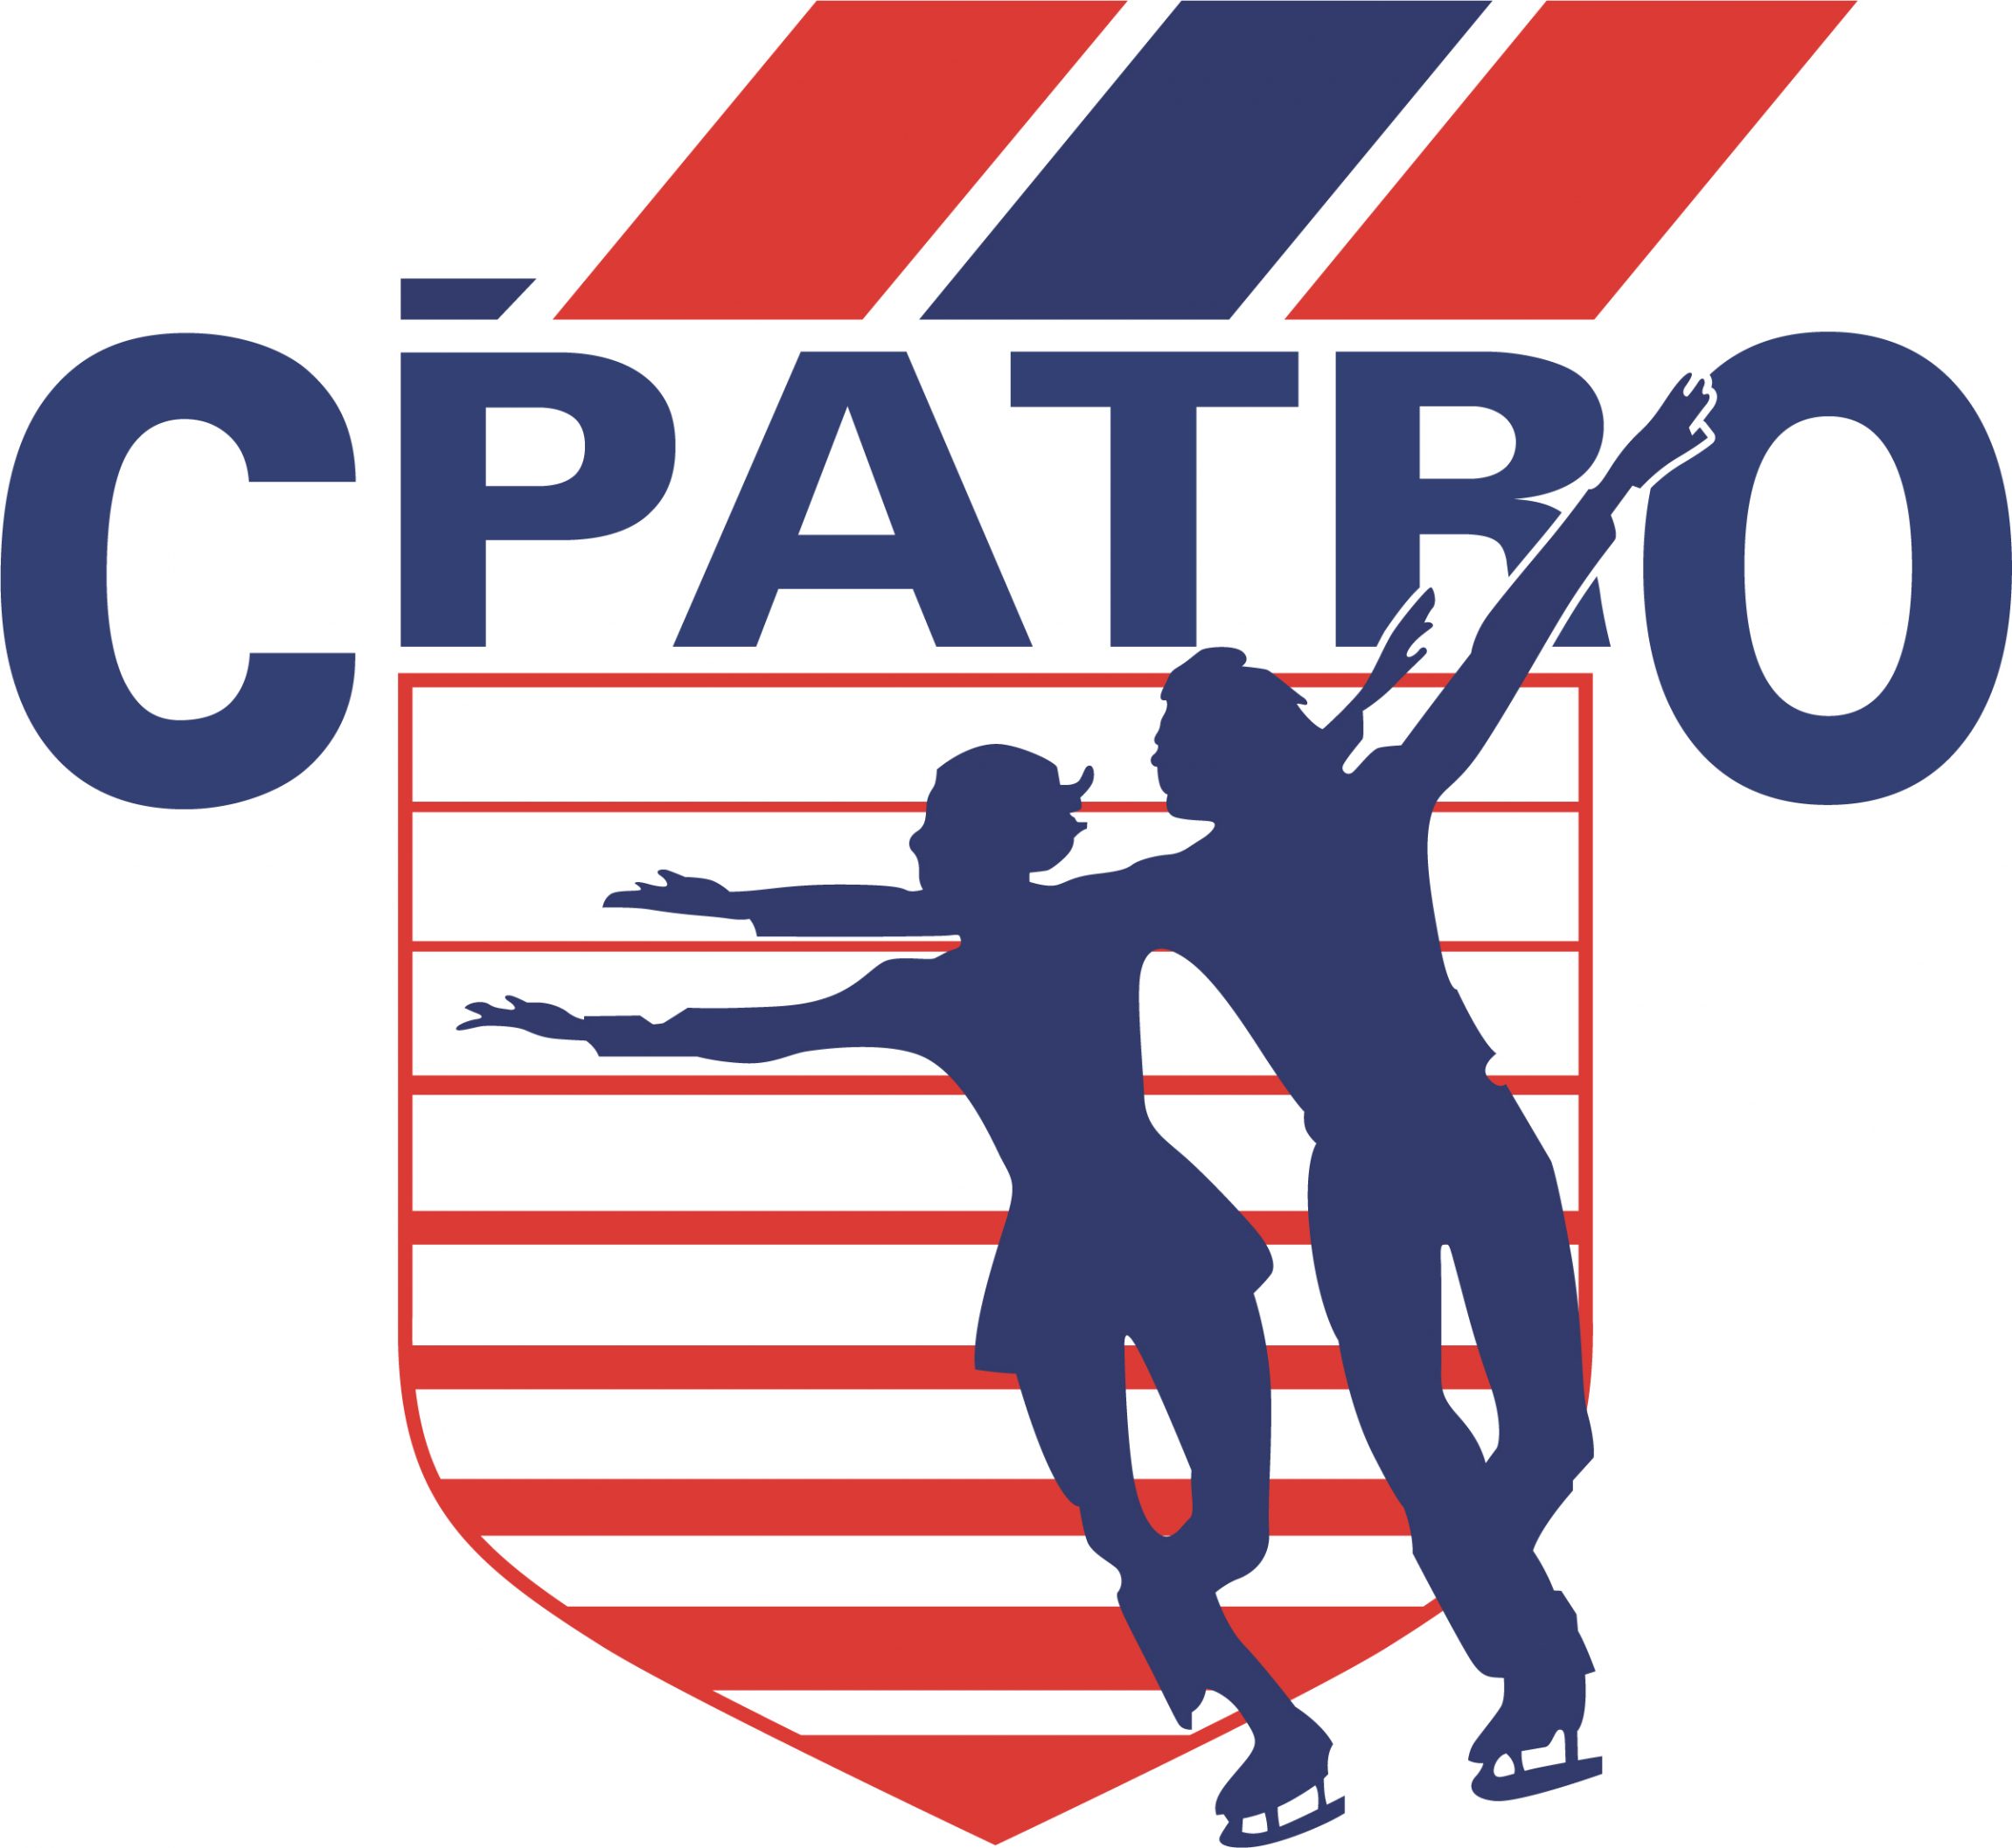 Cpatro logo OFFICIEL